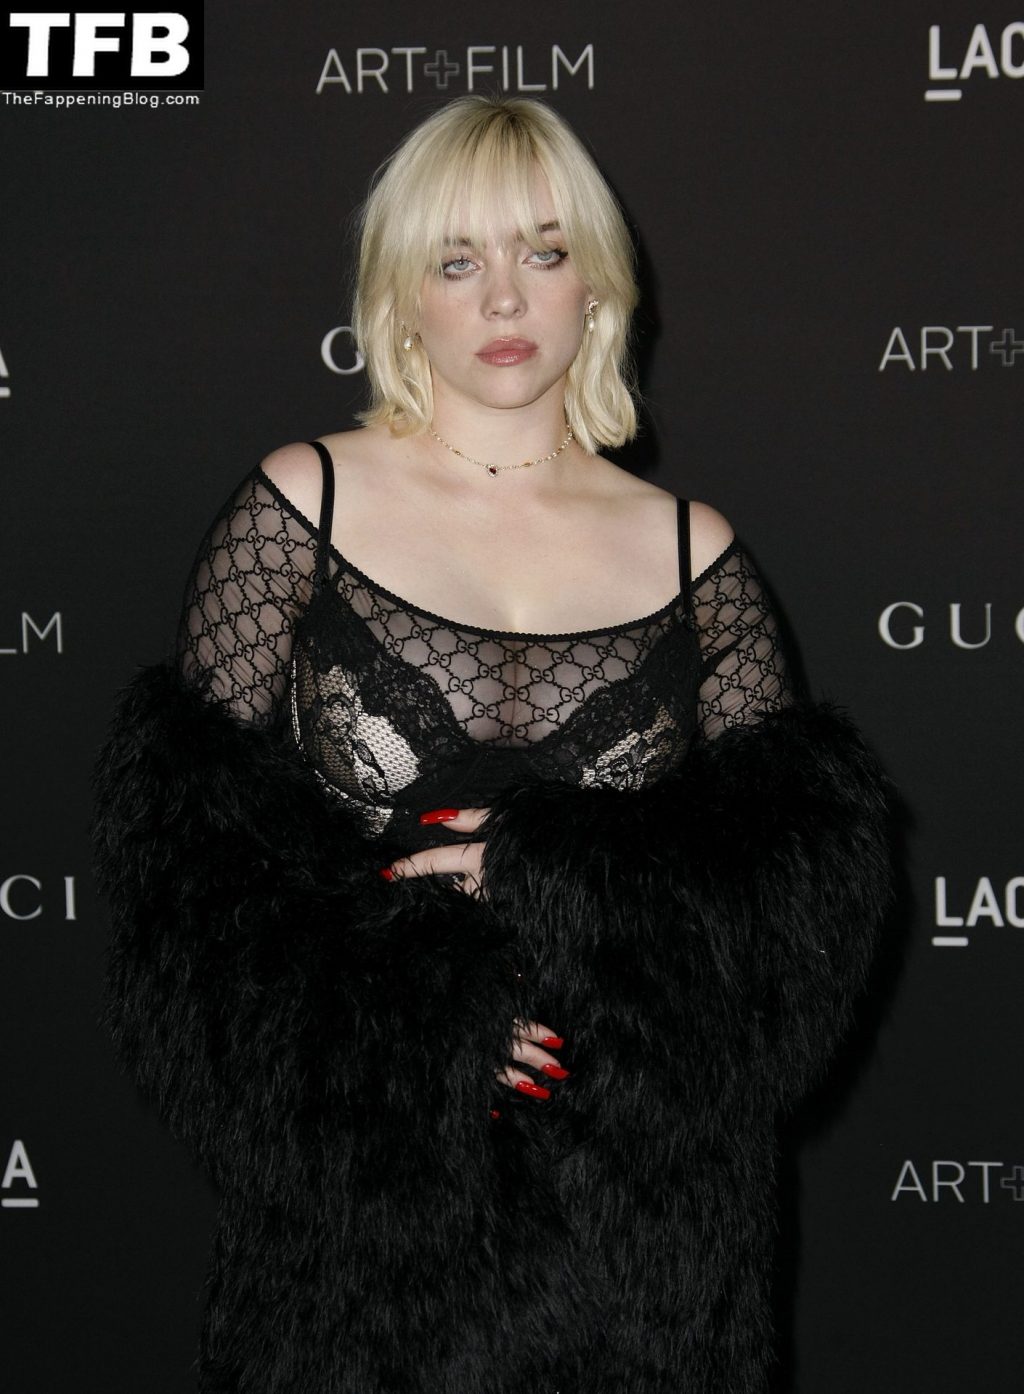 Billie Eilish Displays Her Sexy Boobs the 10th Annual LACMA ART+FILM Gala (37 Photos)